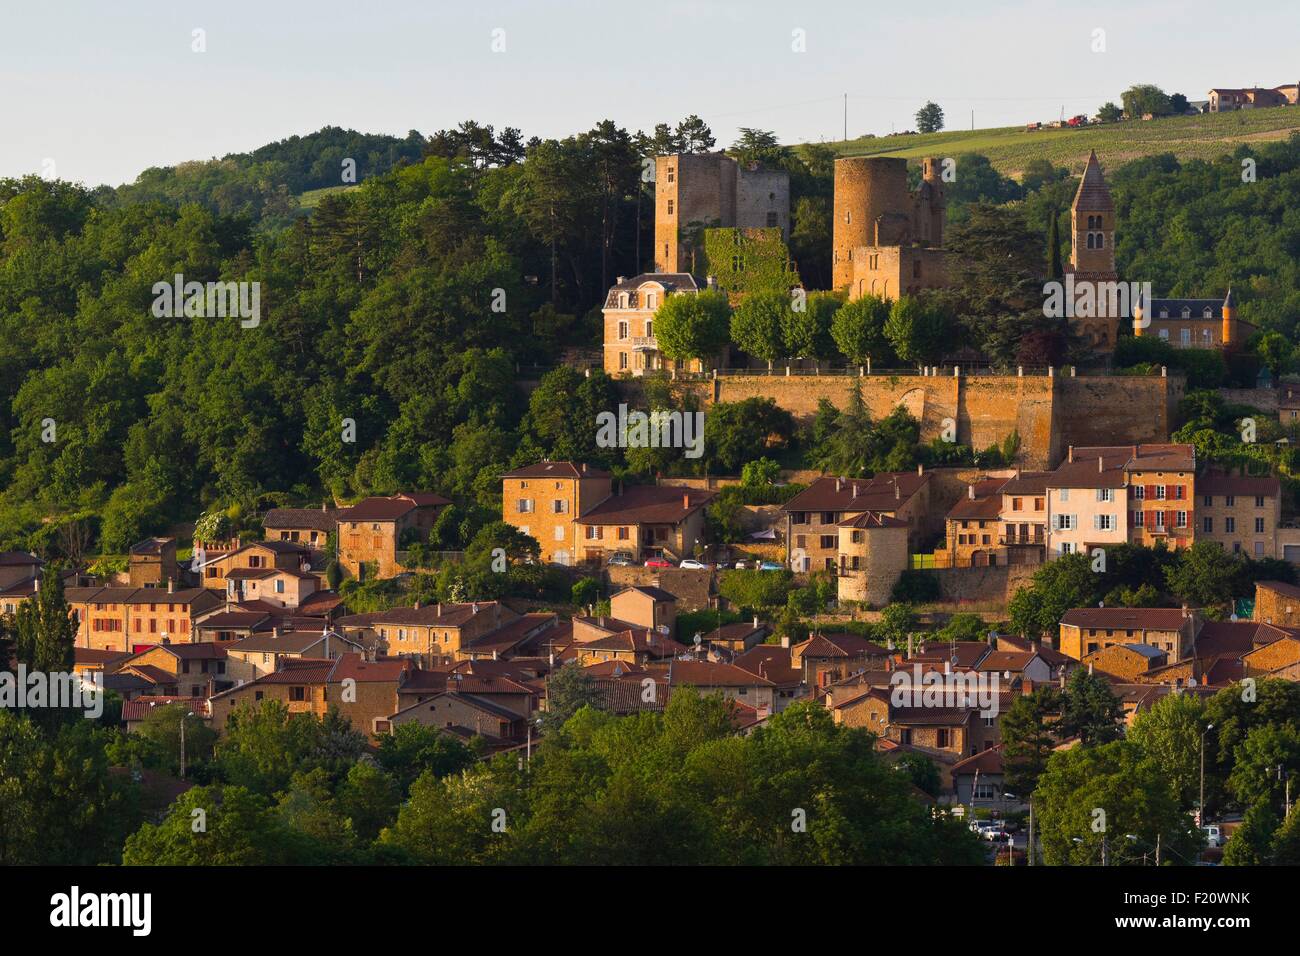 France, Rhone, Beaujolais region, Gilded Stones area, village of Chatillon d'Azergues Stock Photo